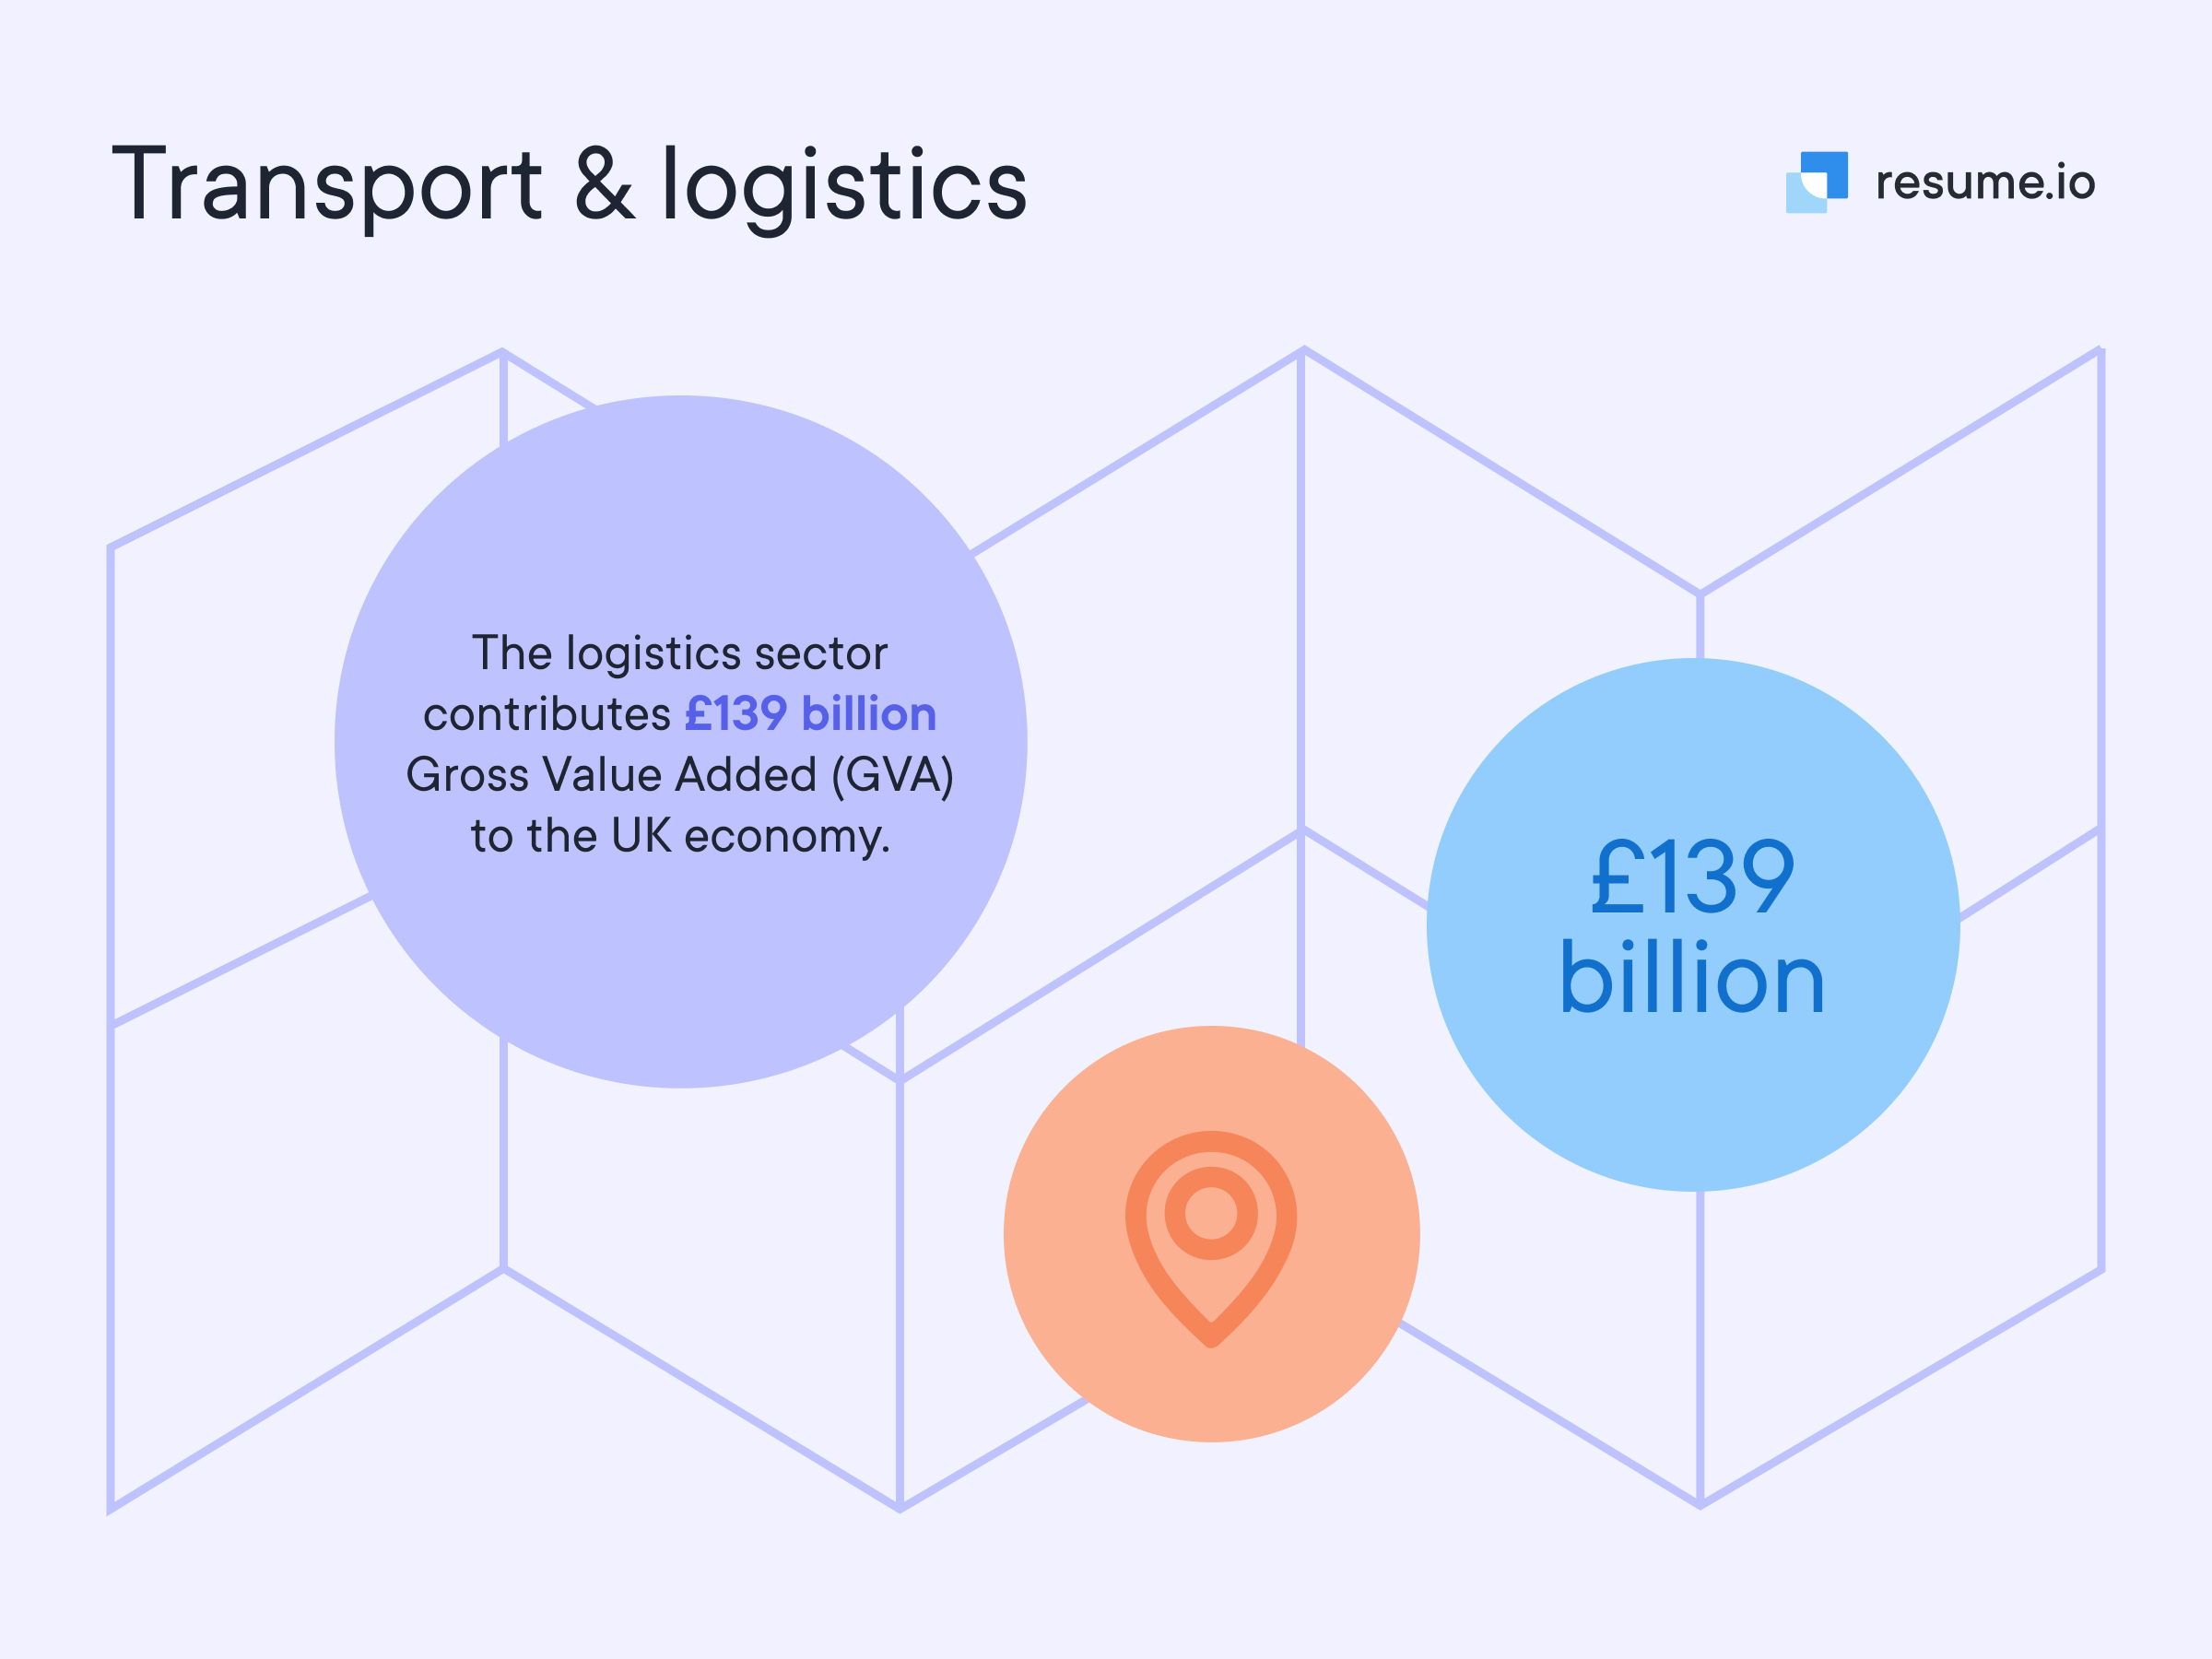 Logistic sector contributes￡139 billion GVA to the UK economy